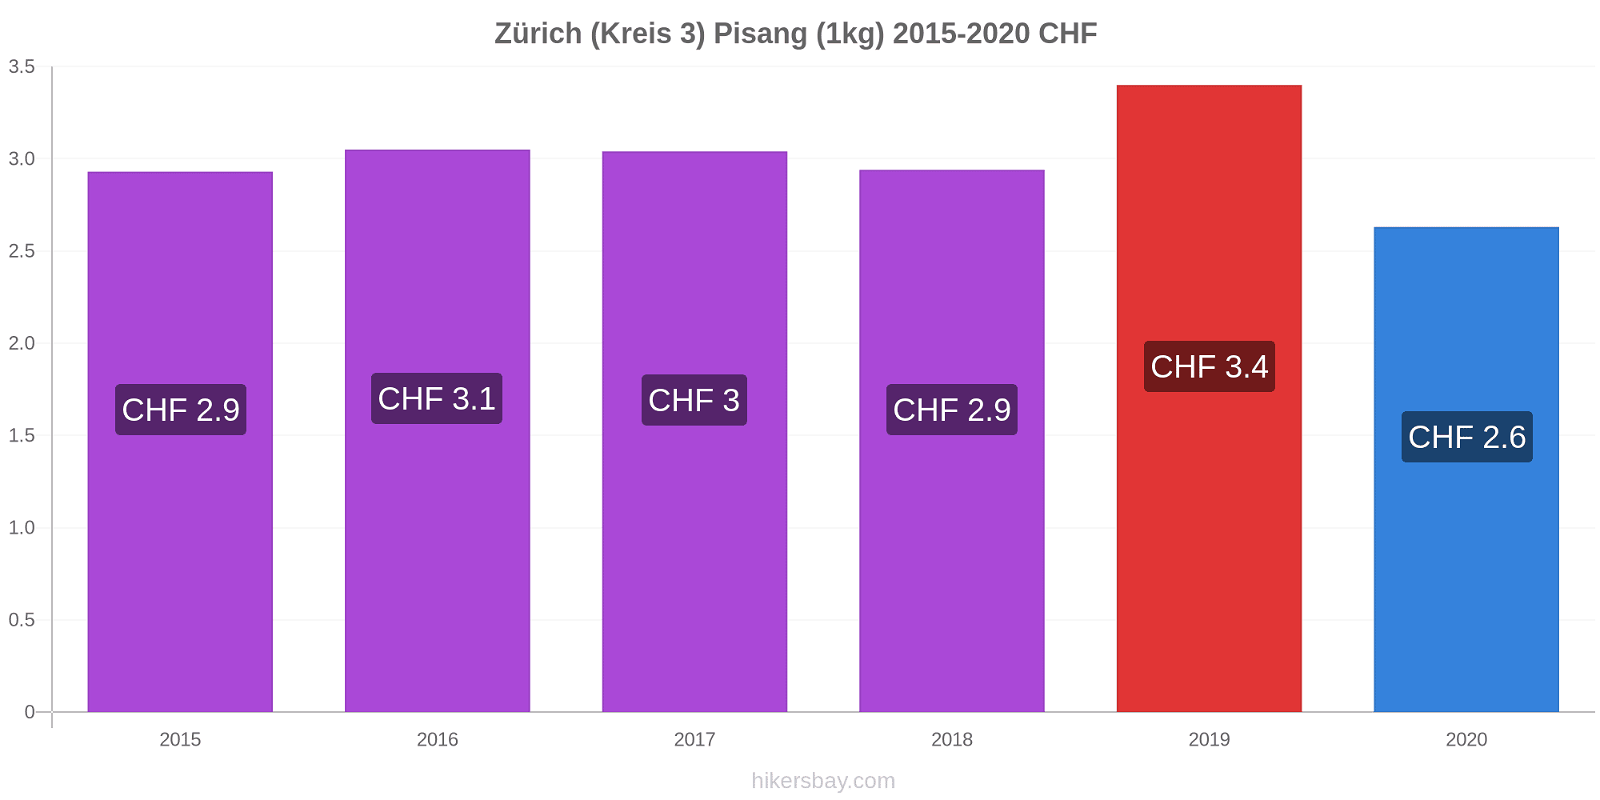 Zürich (Kreis 3) perubahan harga Pisang (1kg) hikersbay.com